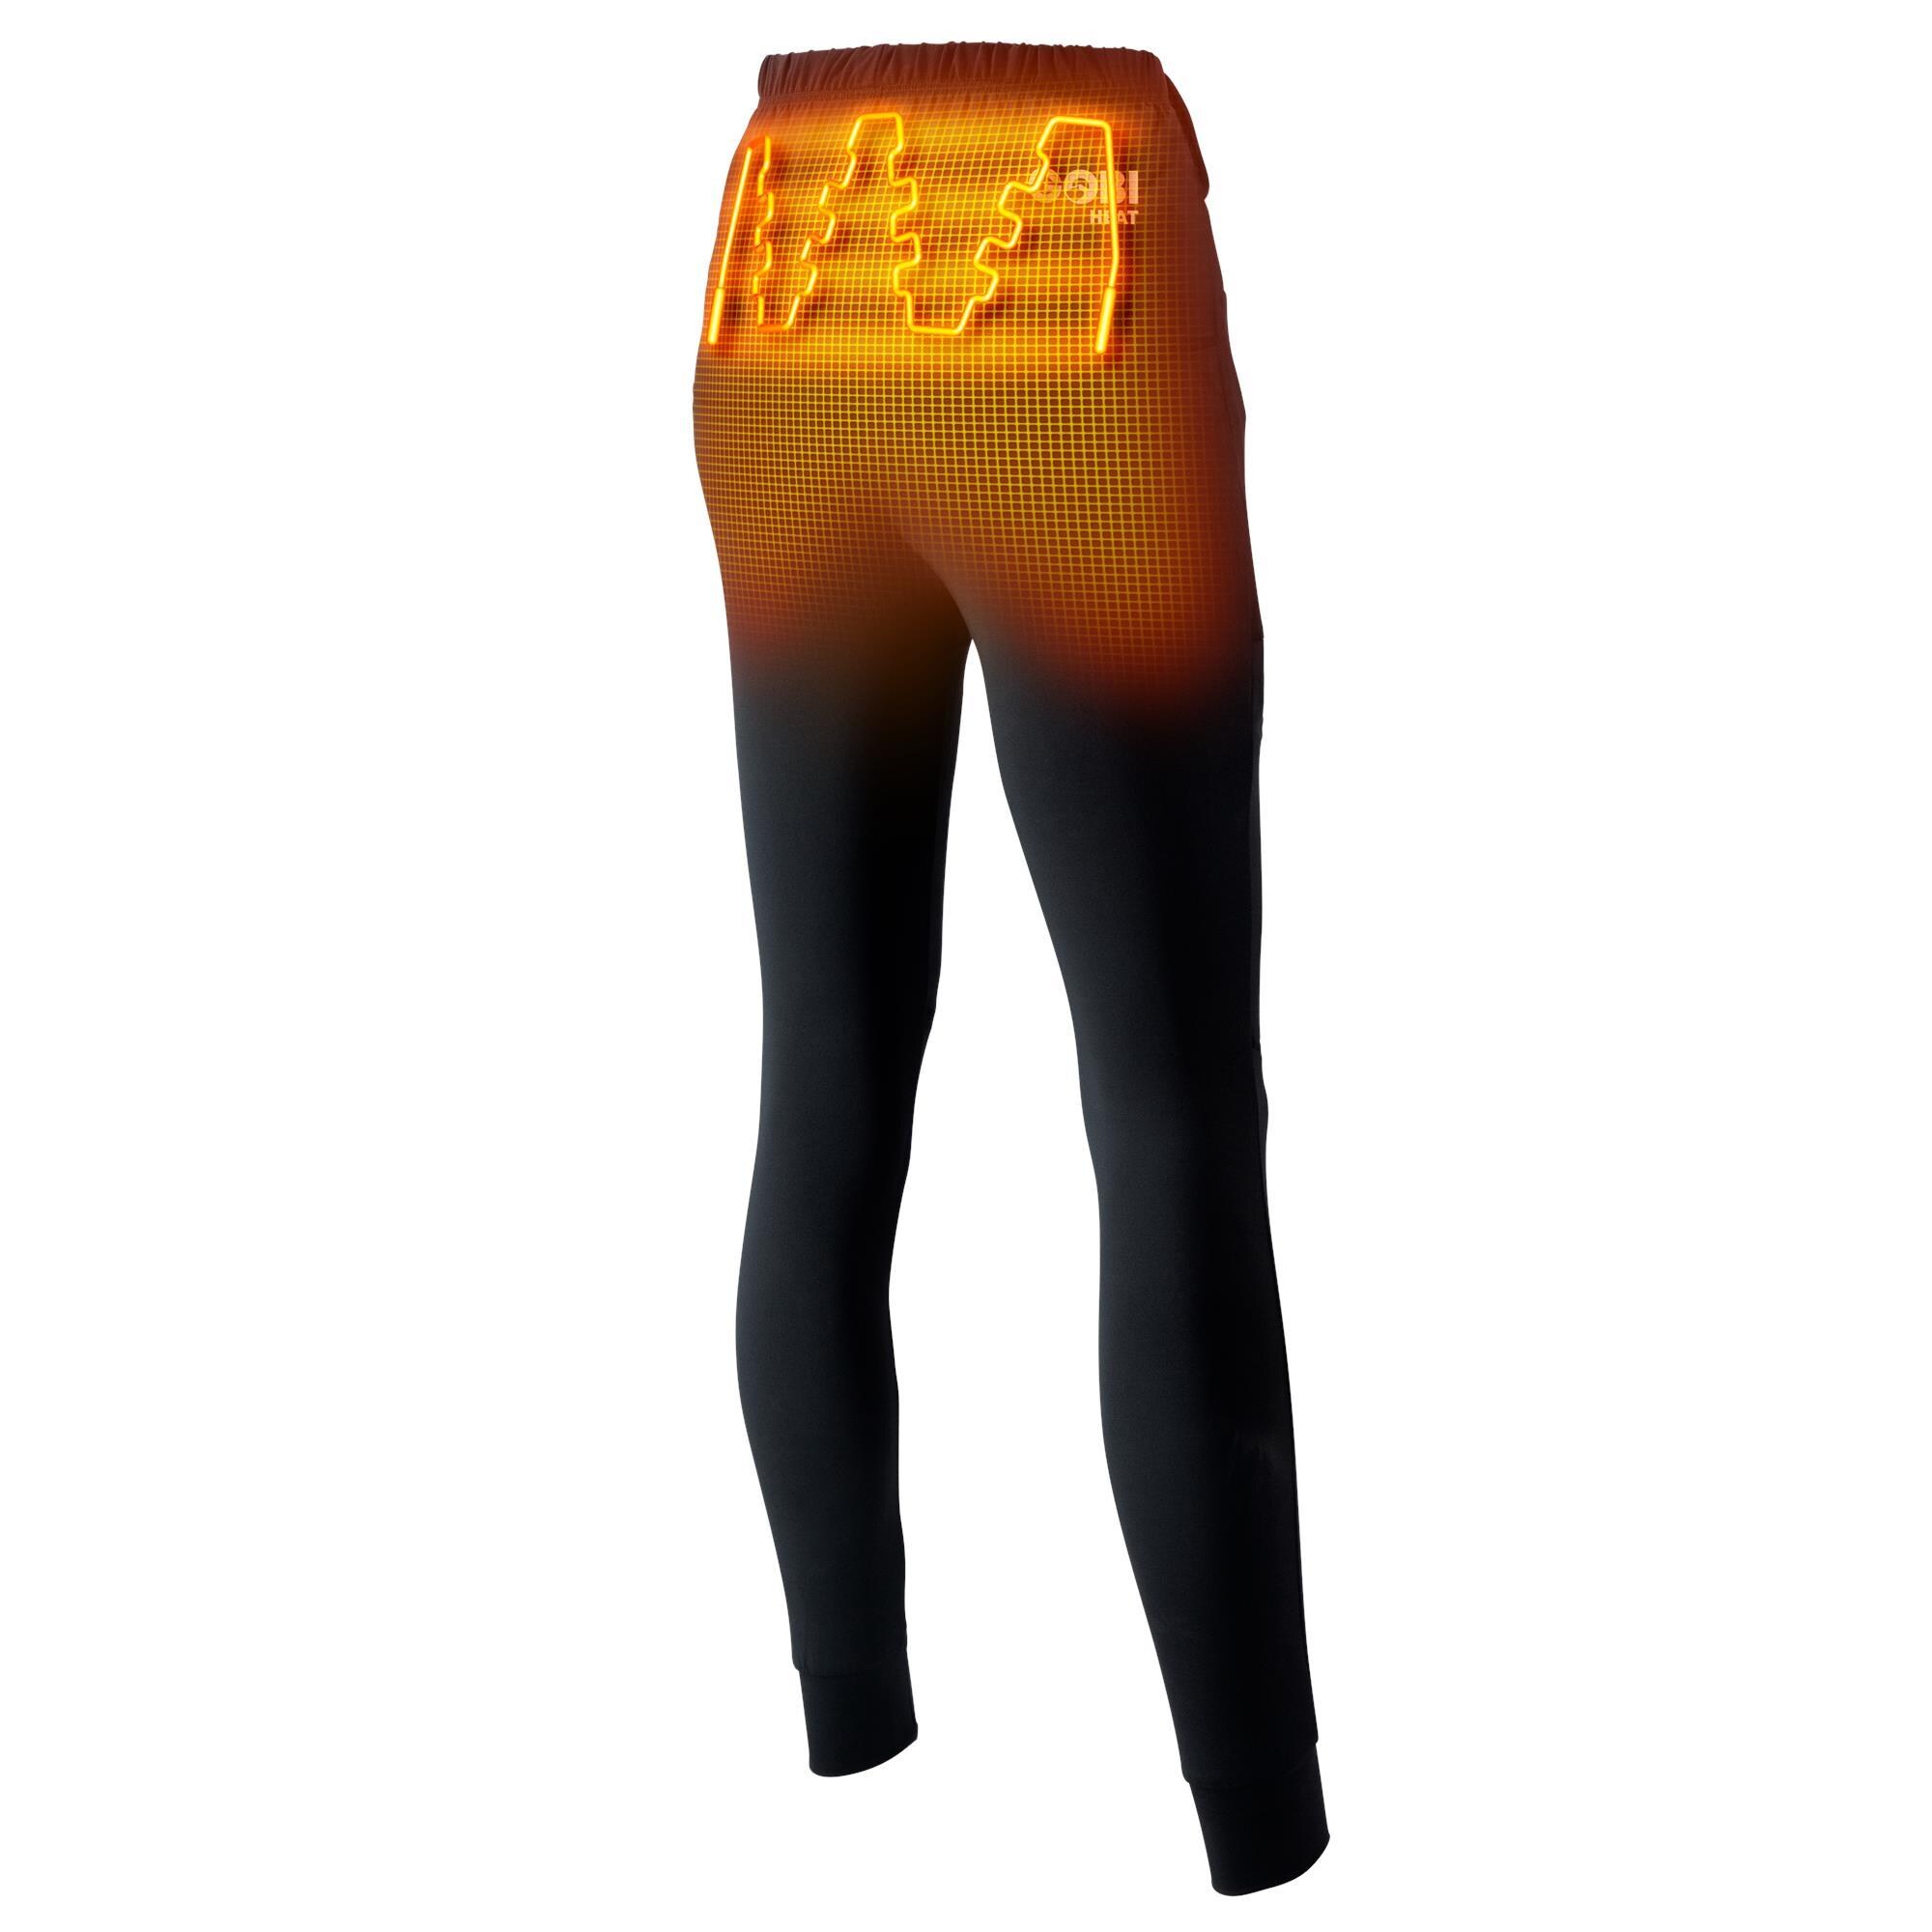 Gobi Heat Women's Black Heated Pants - Medium, Wind and Water